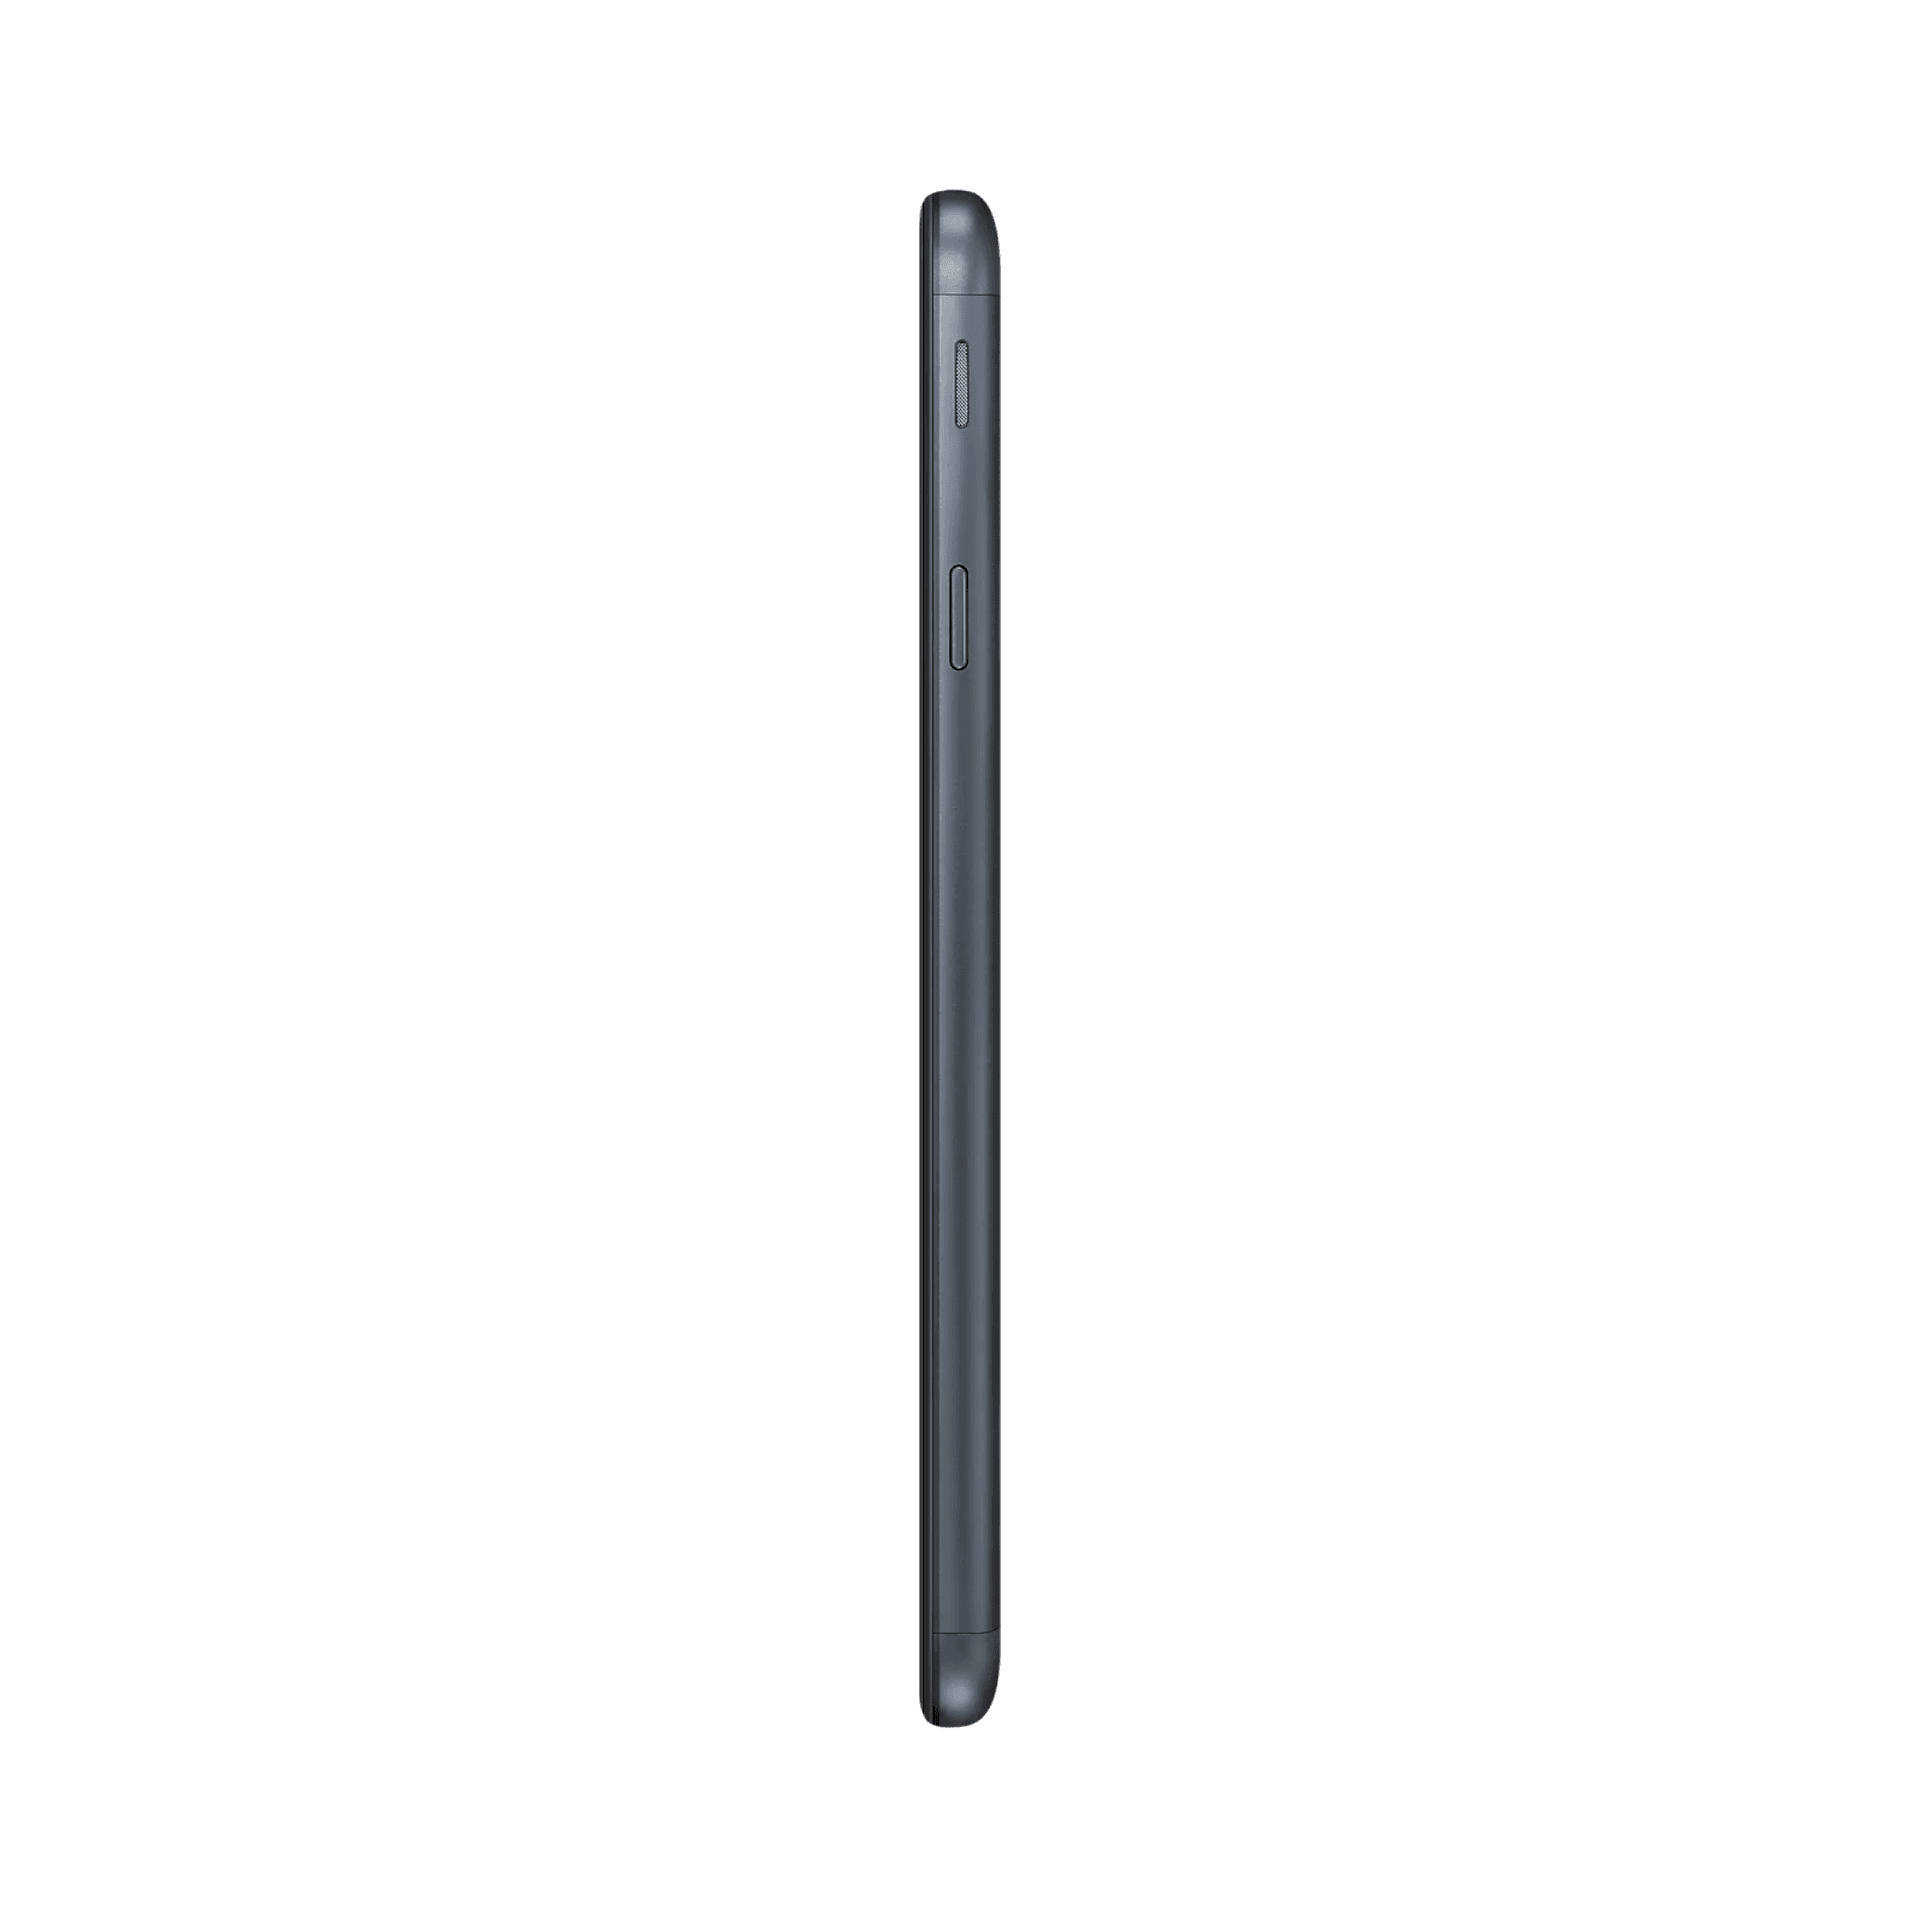 Samsung Galaxy J7 Prime - 16 GB - Siyah